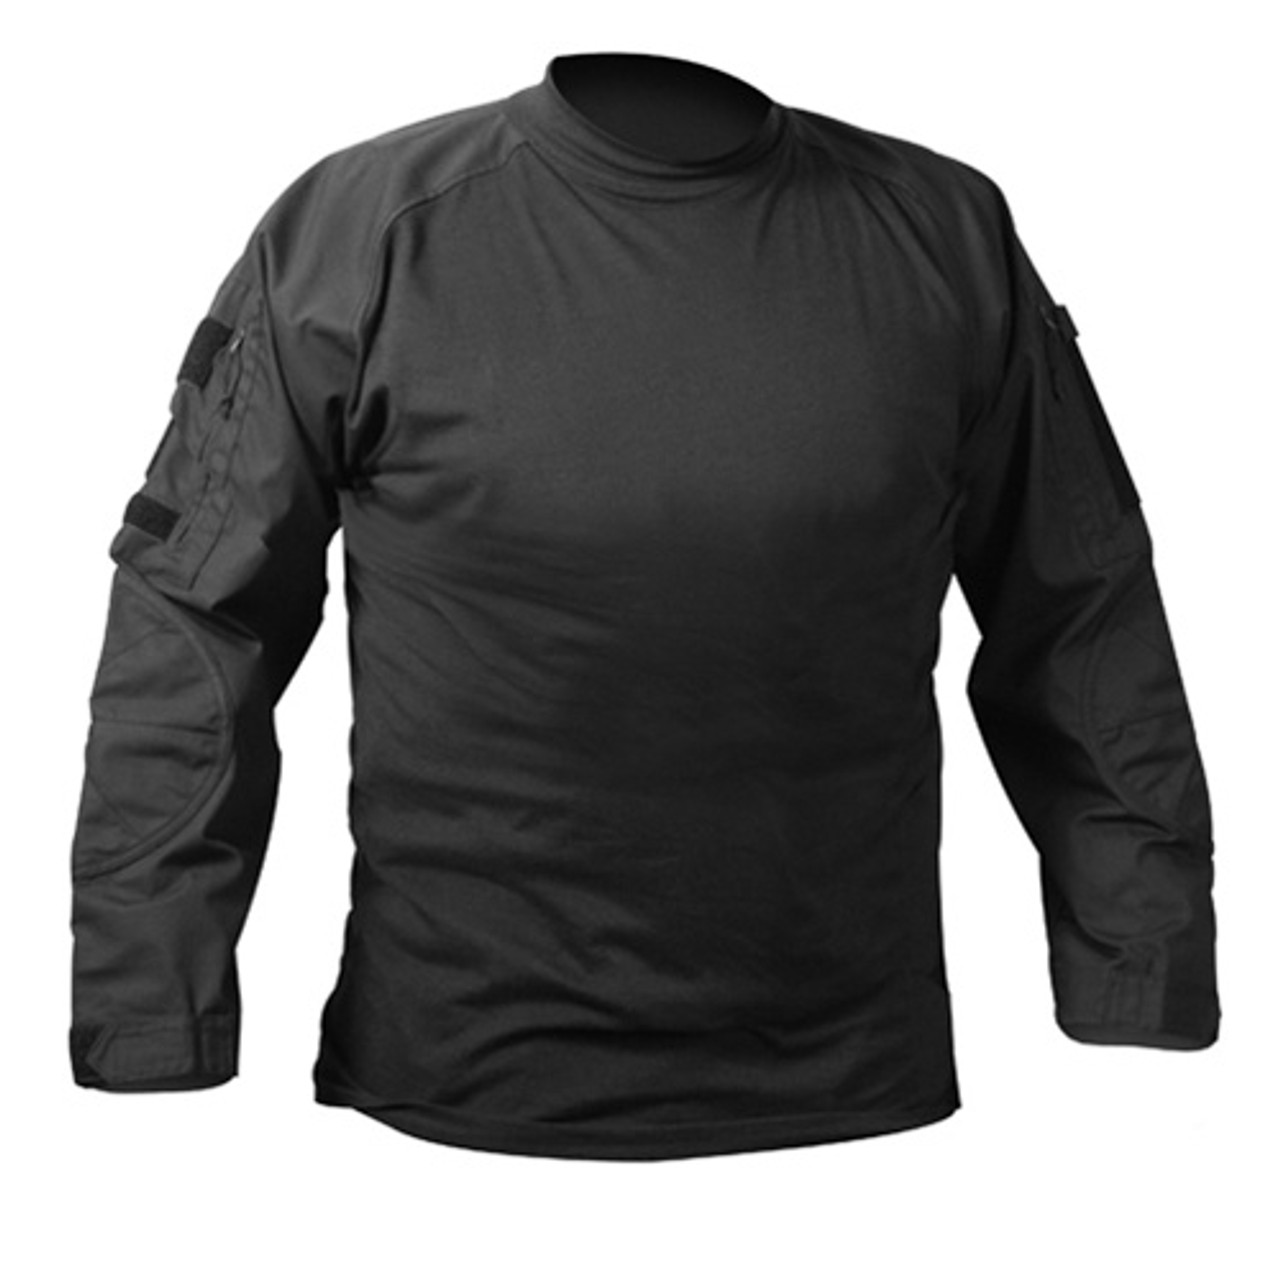 Black Combat Shirt from Hessen Tactical